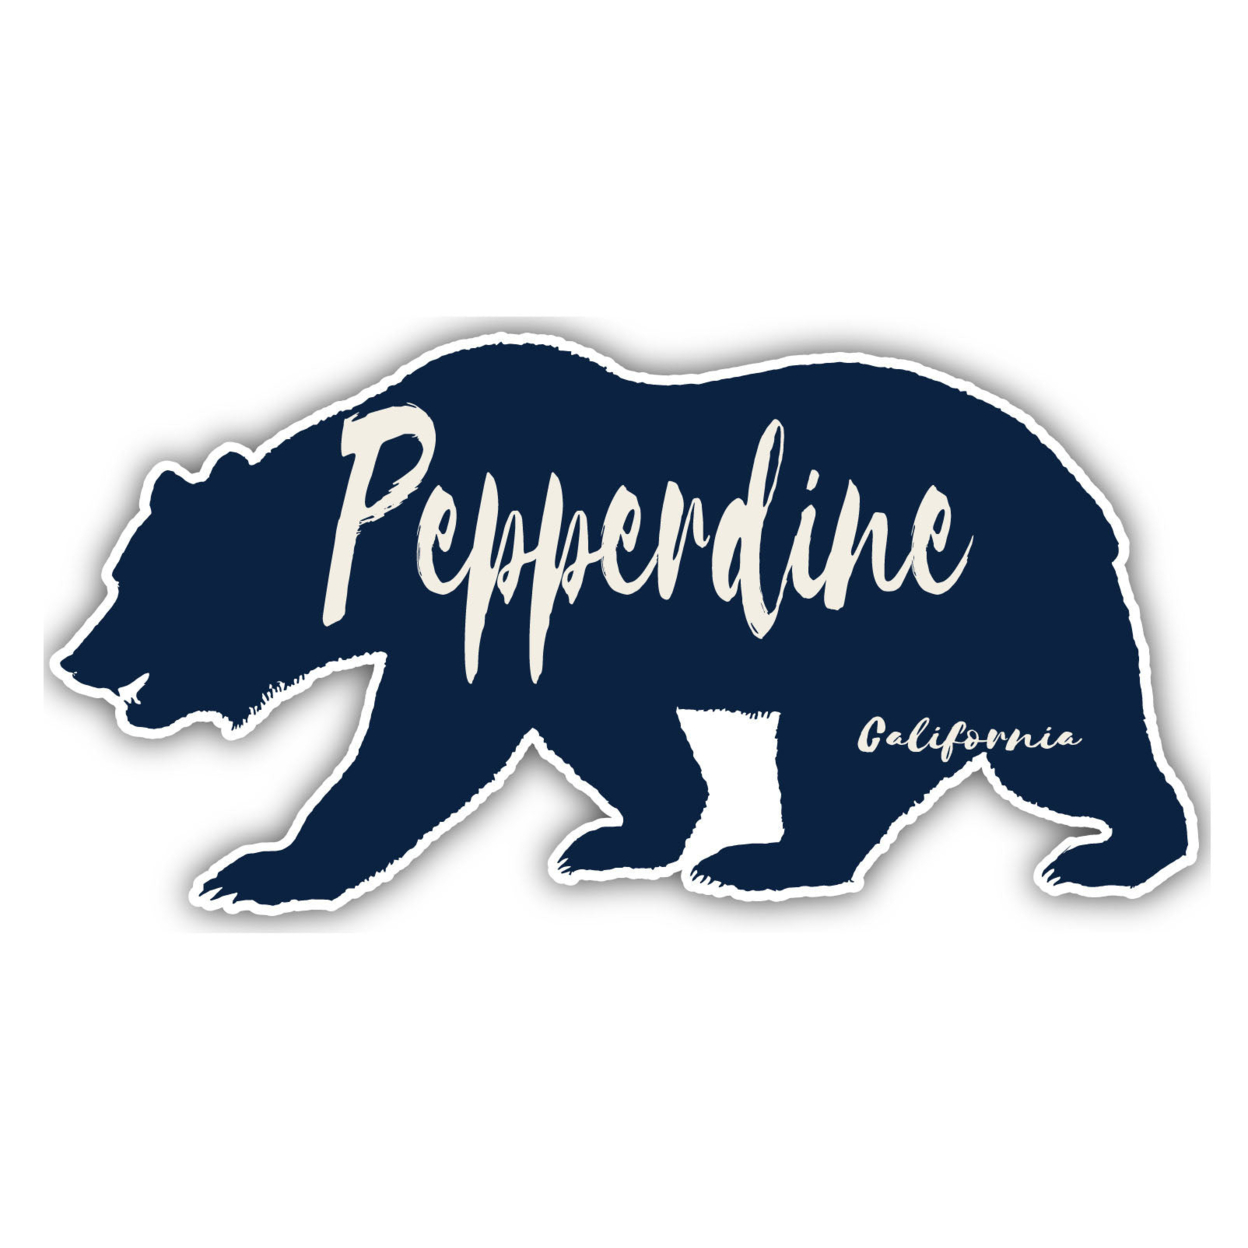 Pepperdine California Souvenir Decorative Stickers (Choose Theme And Size) - Single Unit, 4-Inch, Camp Life